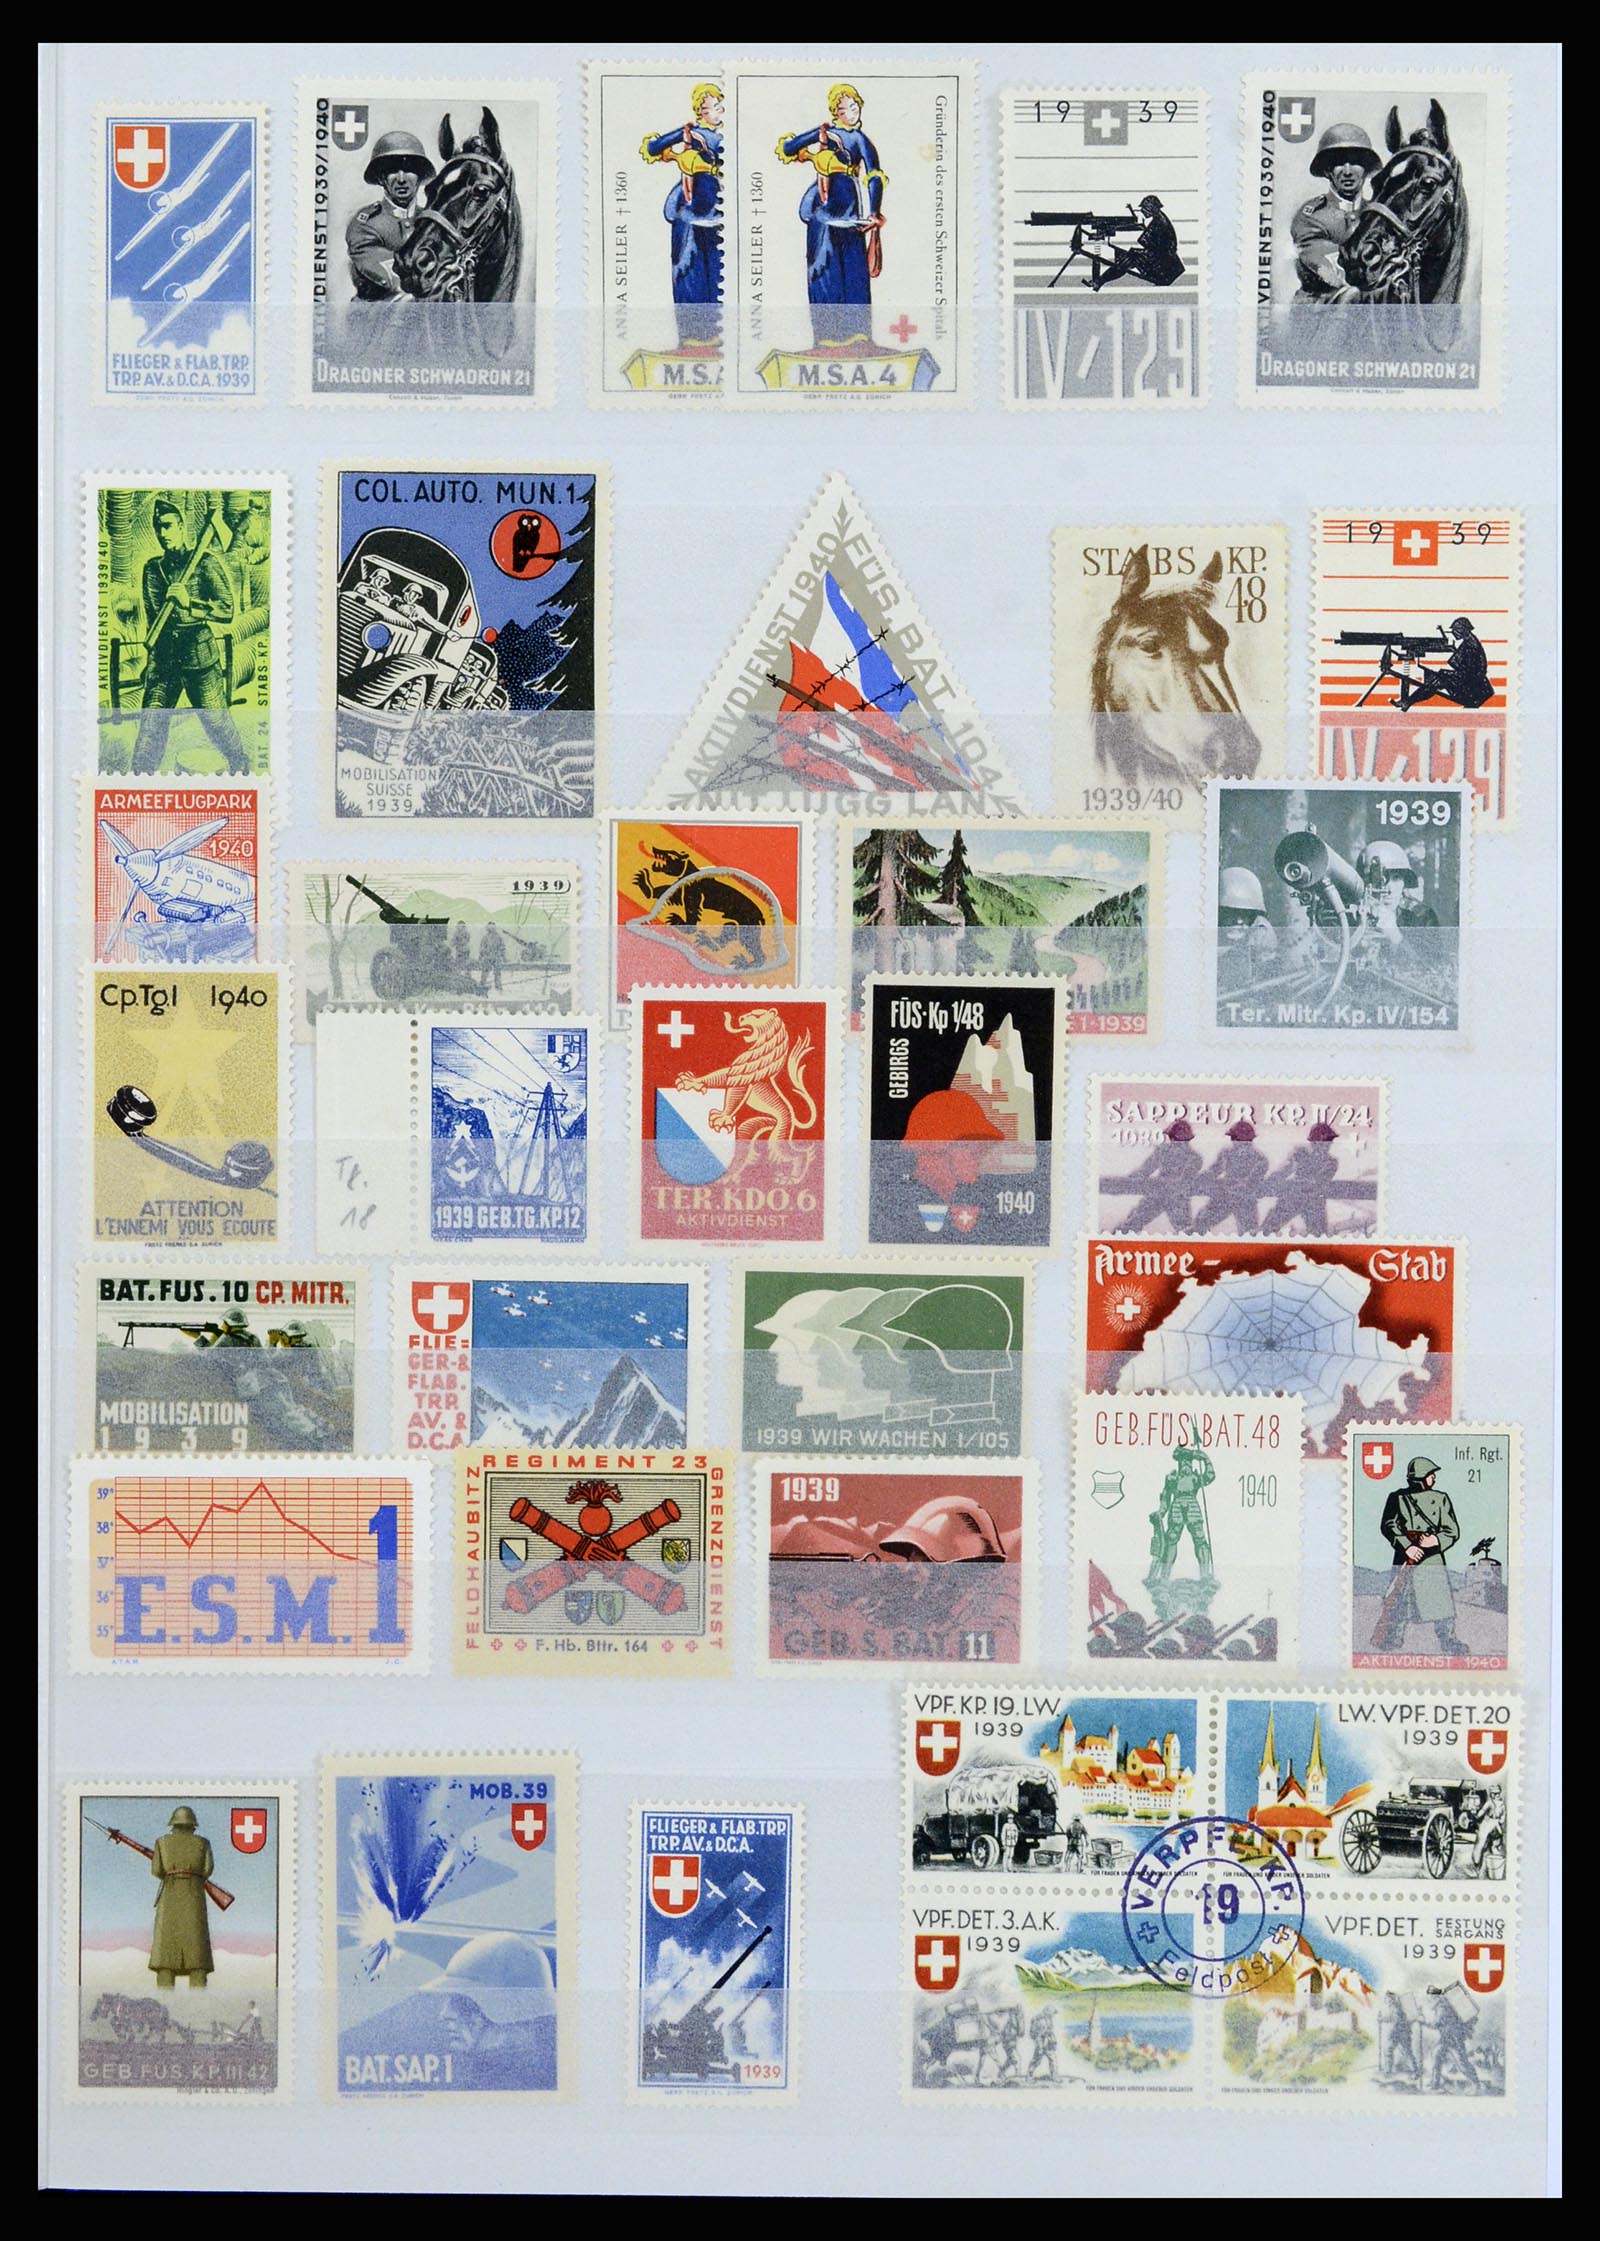 37149 015 - Stamp collection 37149 Switzerland soldier stamps 1914-1945.